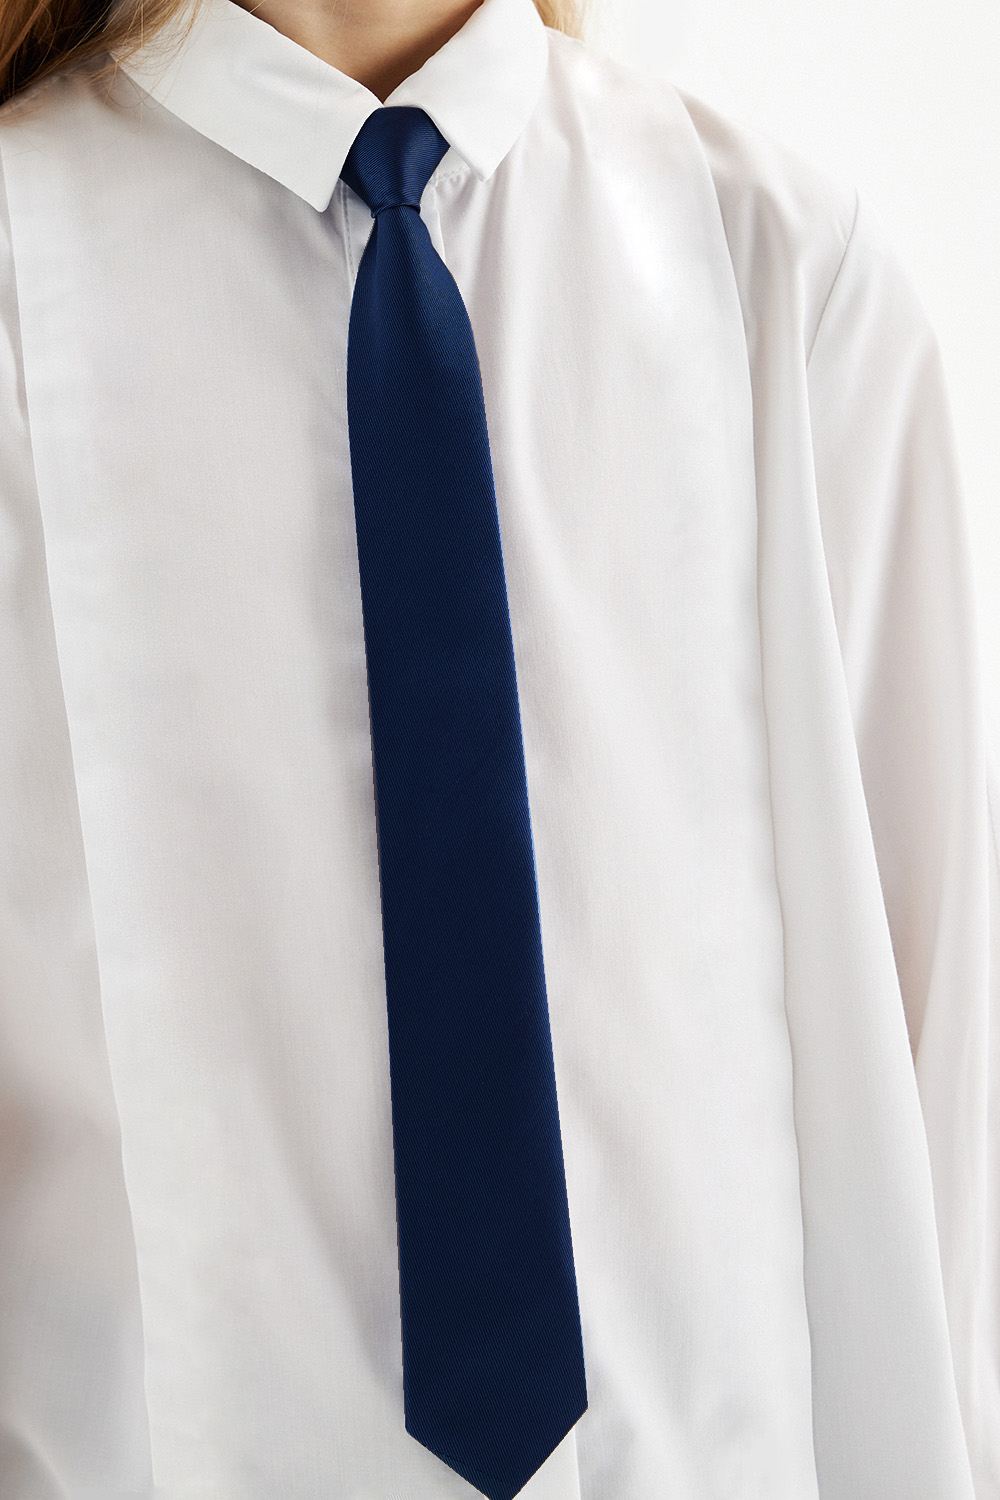 Классический галстук из атласной ткани (SSFSB-229-17904-300) Silver spoon